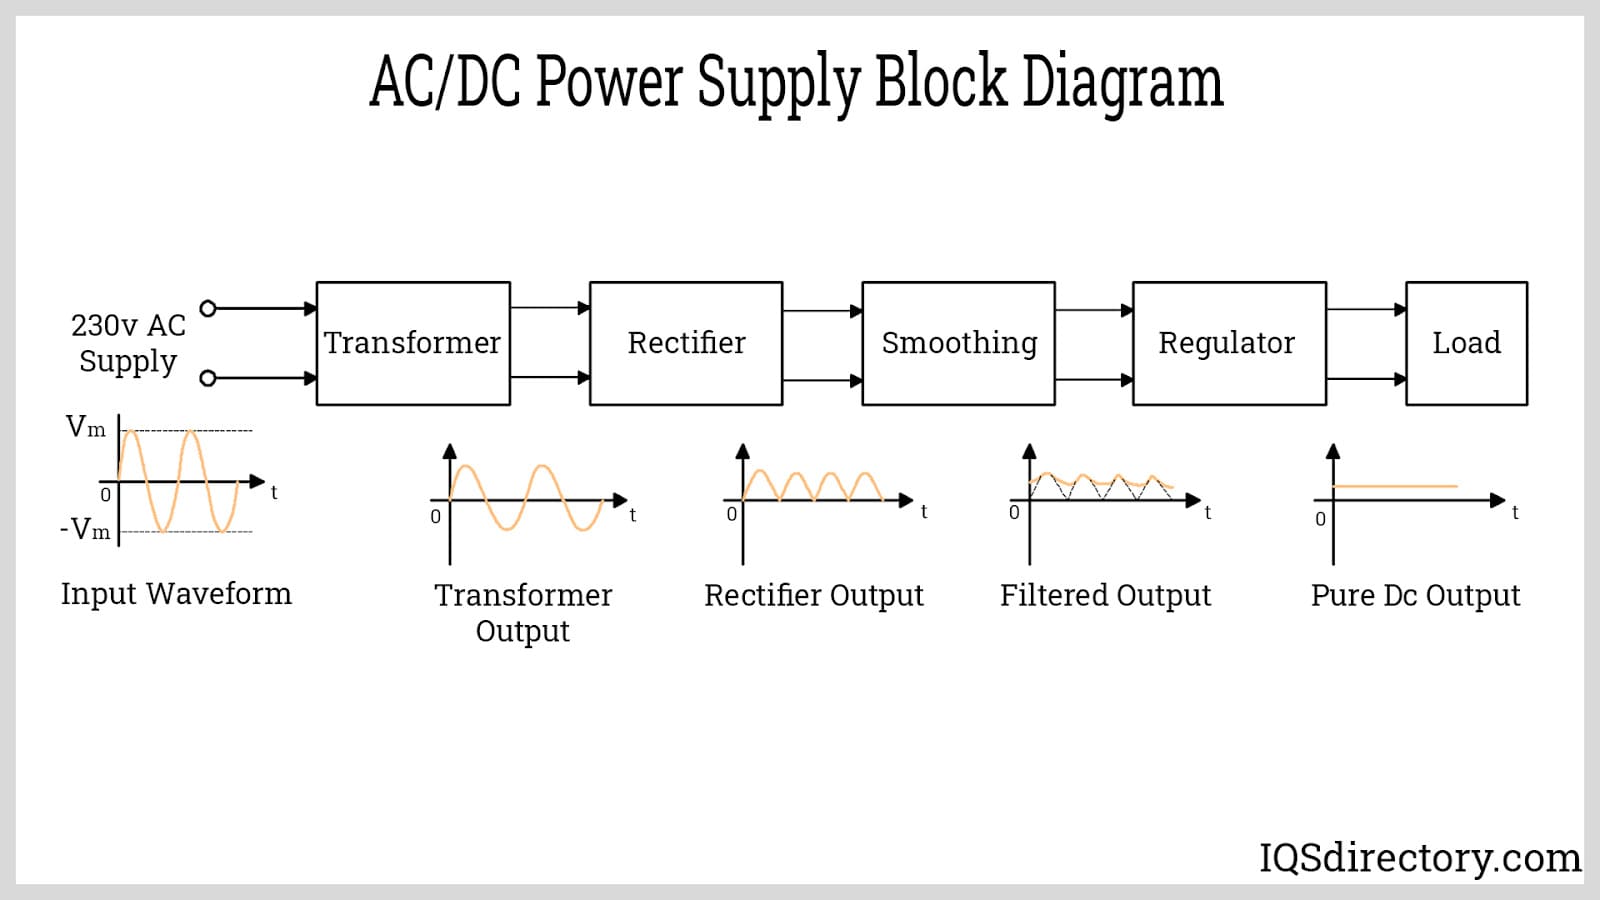 AC/DC Power Supply Block Diagram